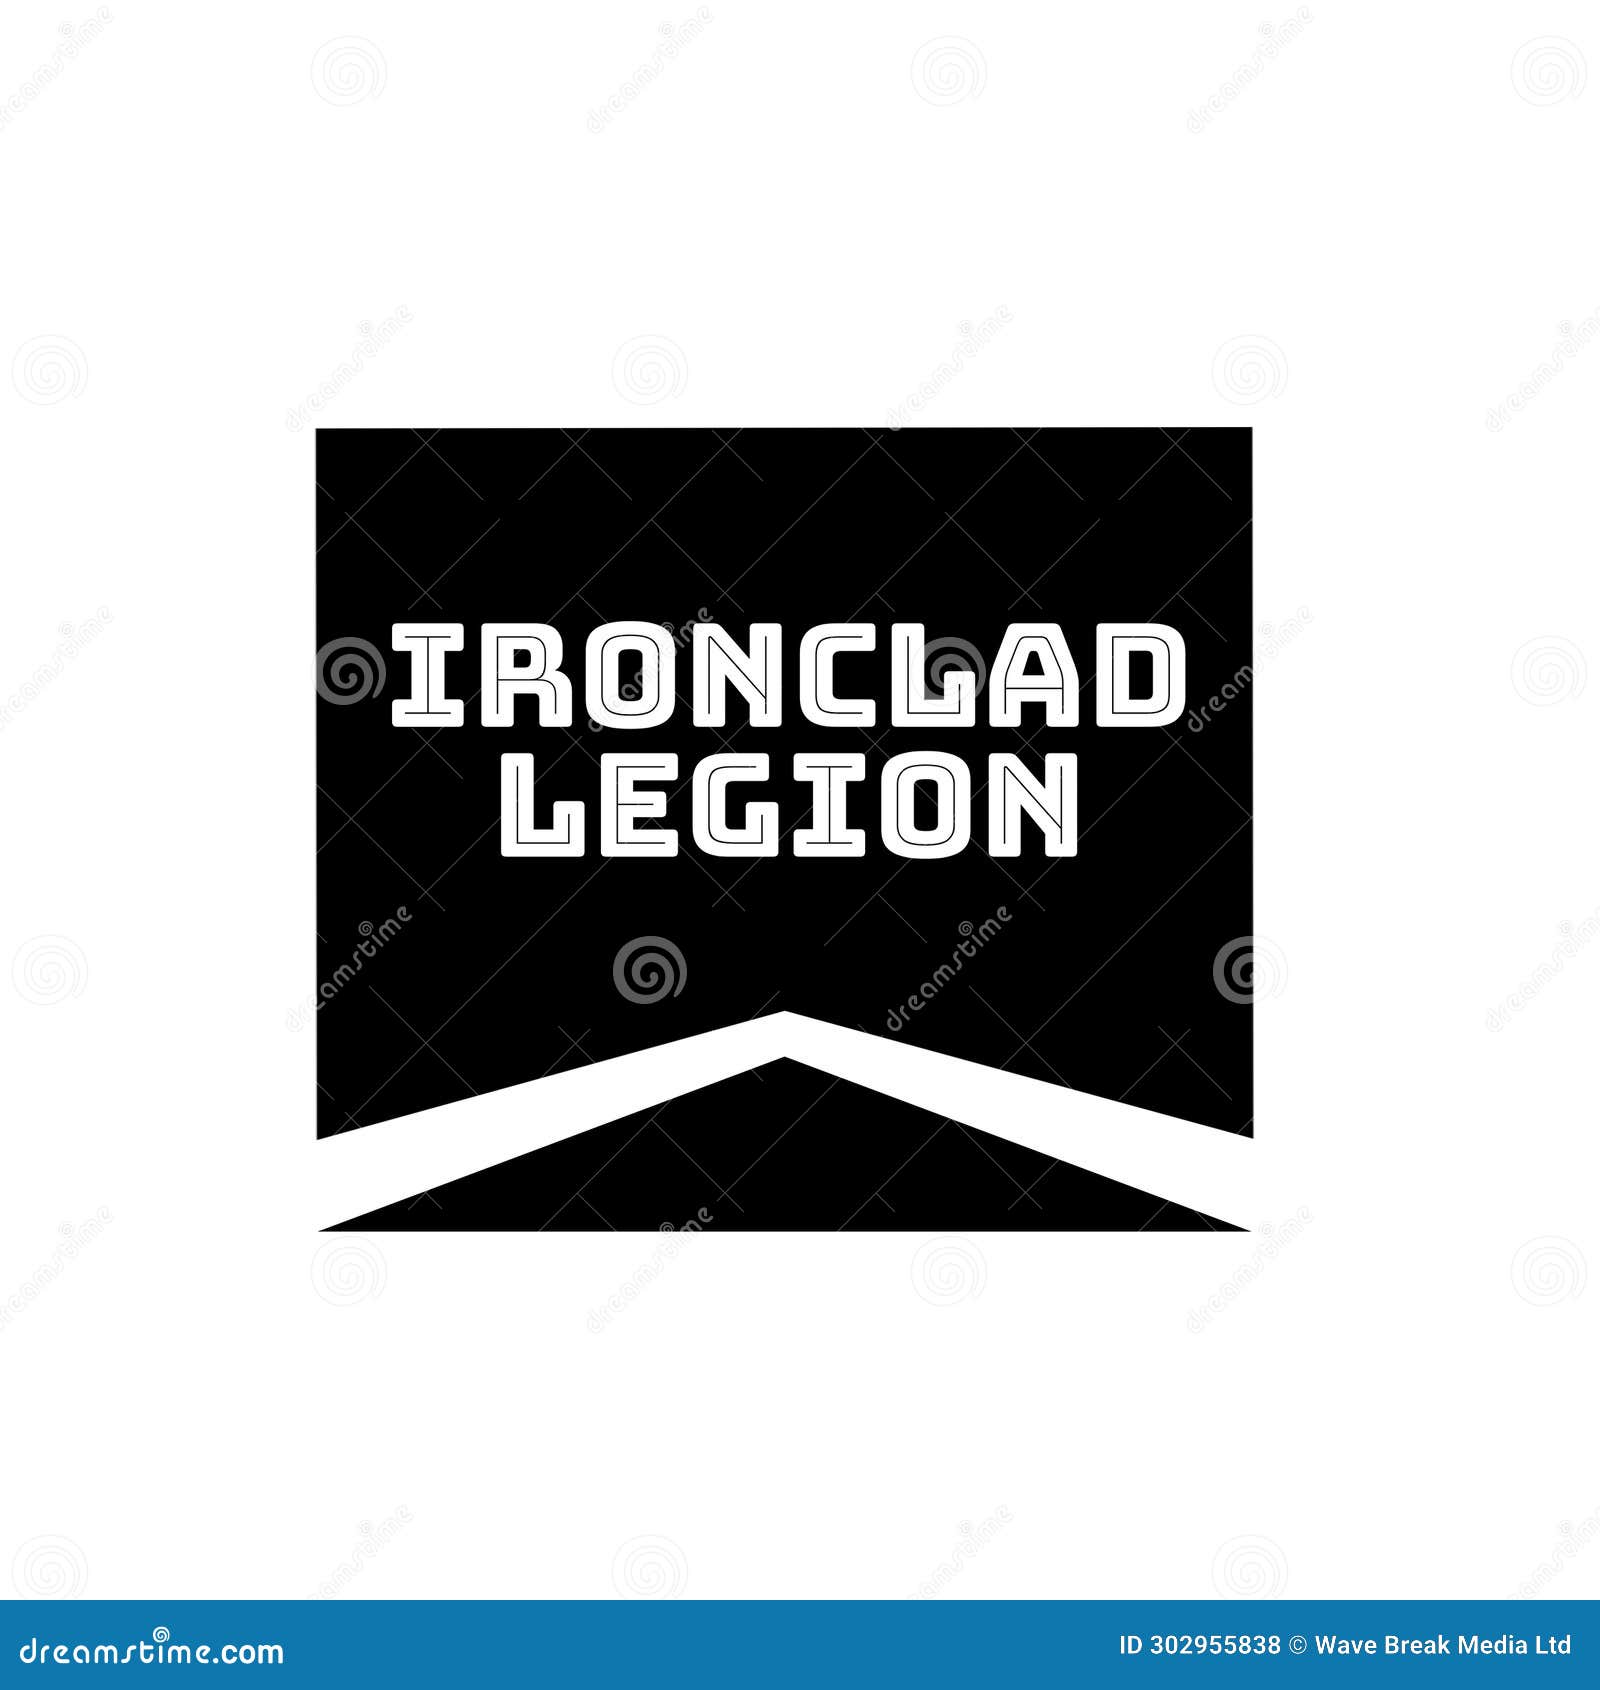 ironclad legion text in white with chevron logo in black rectangle on white background